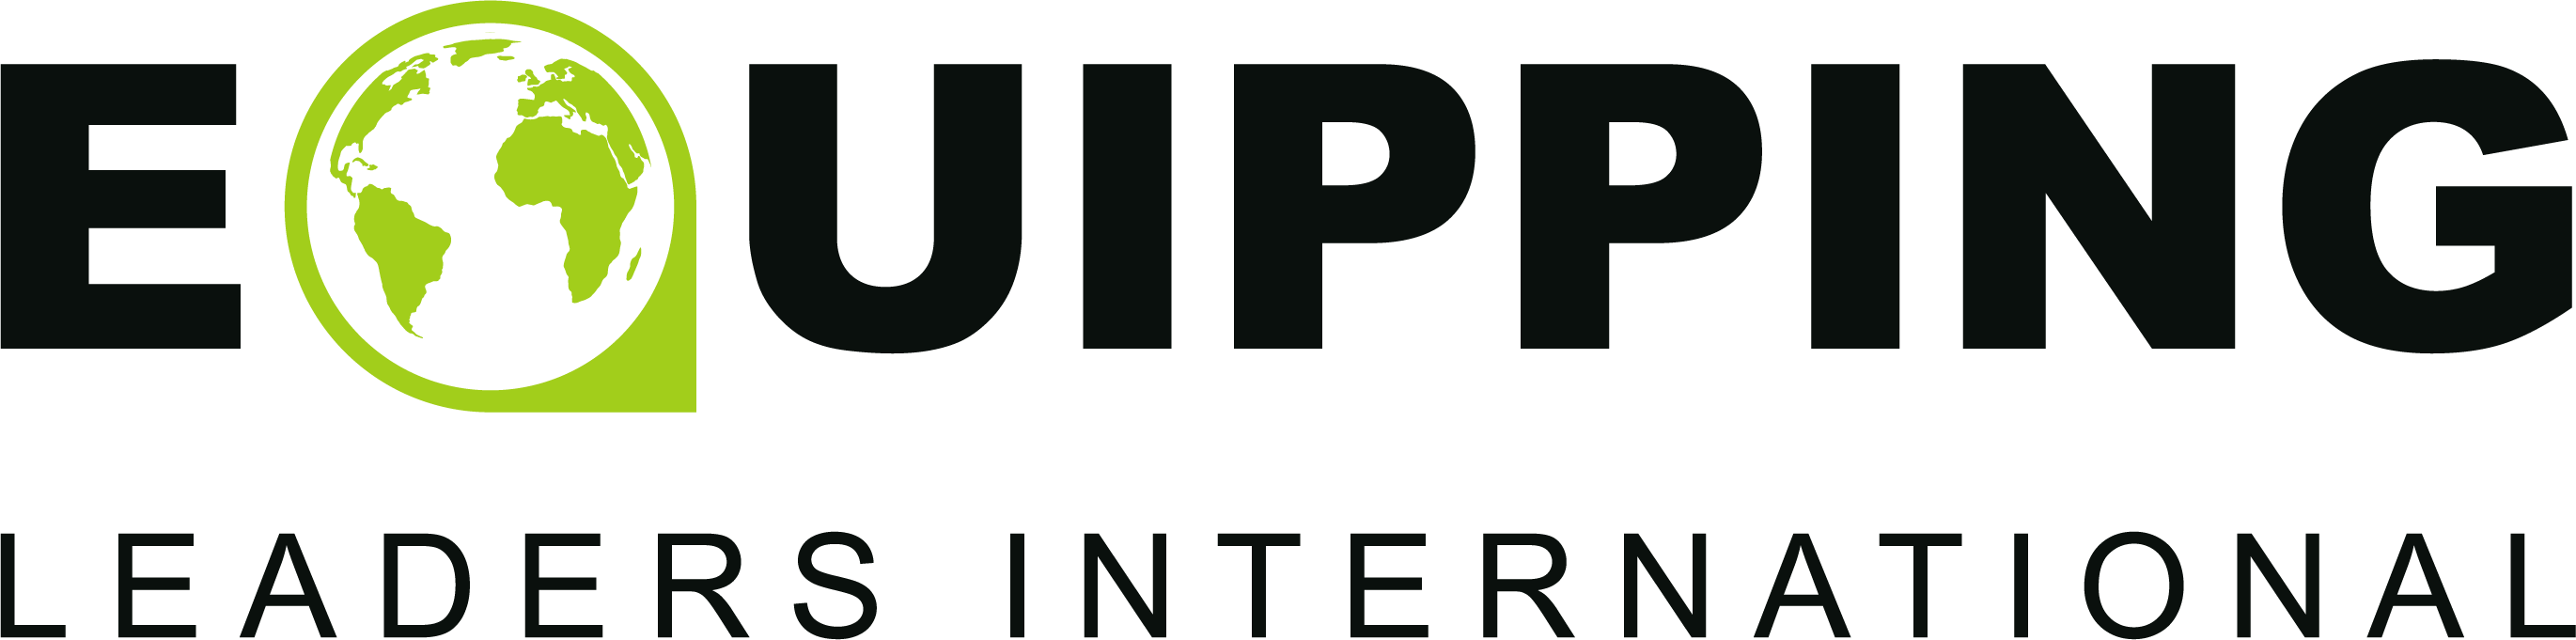 Equipping Leaders International logo